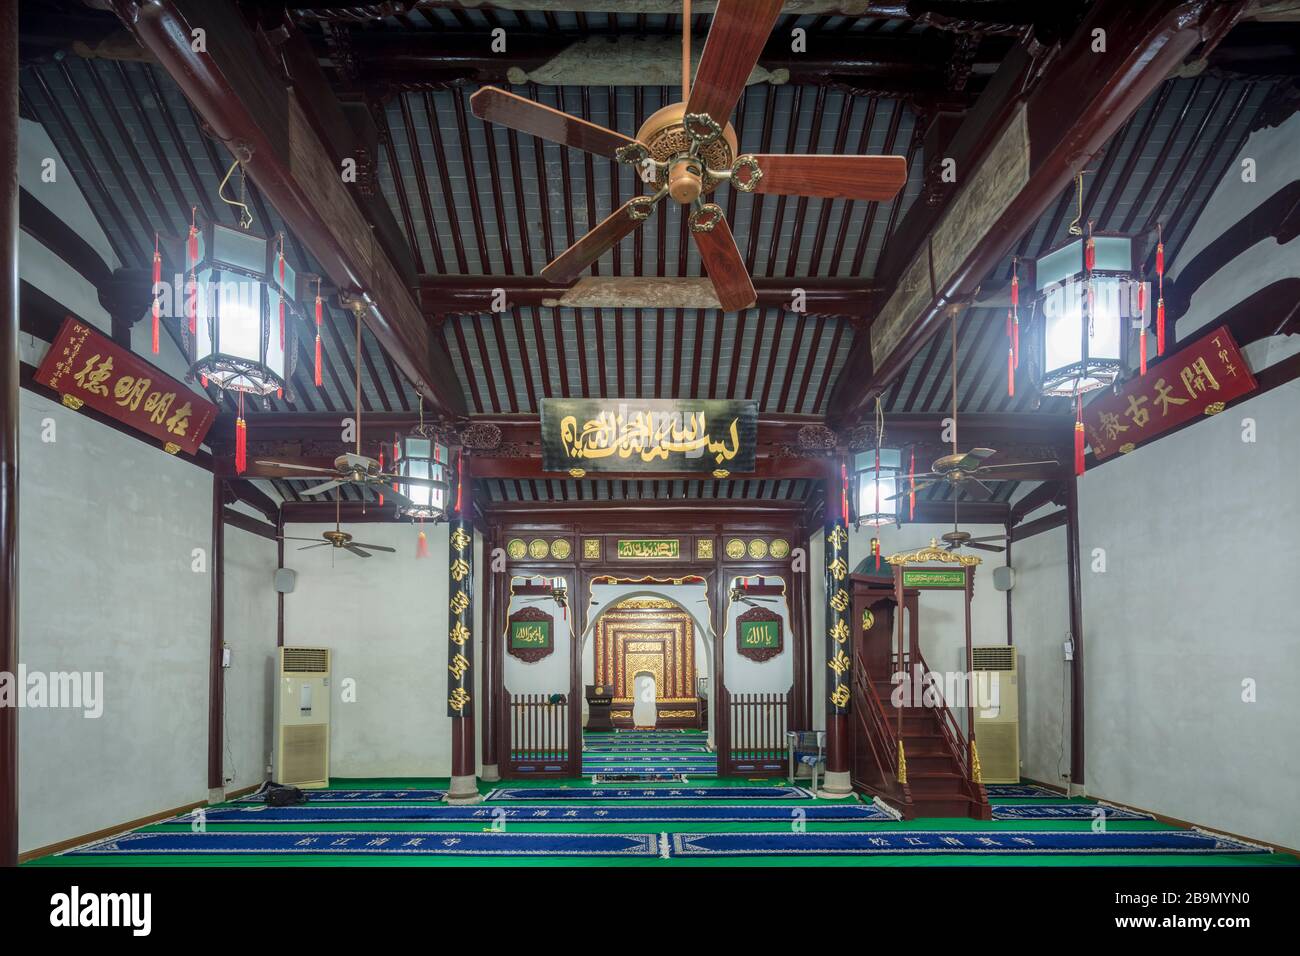 interior prayer hall with mihrab, Song Jiang Mosque, Shanghai, China Stock Photo